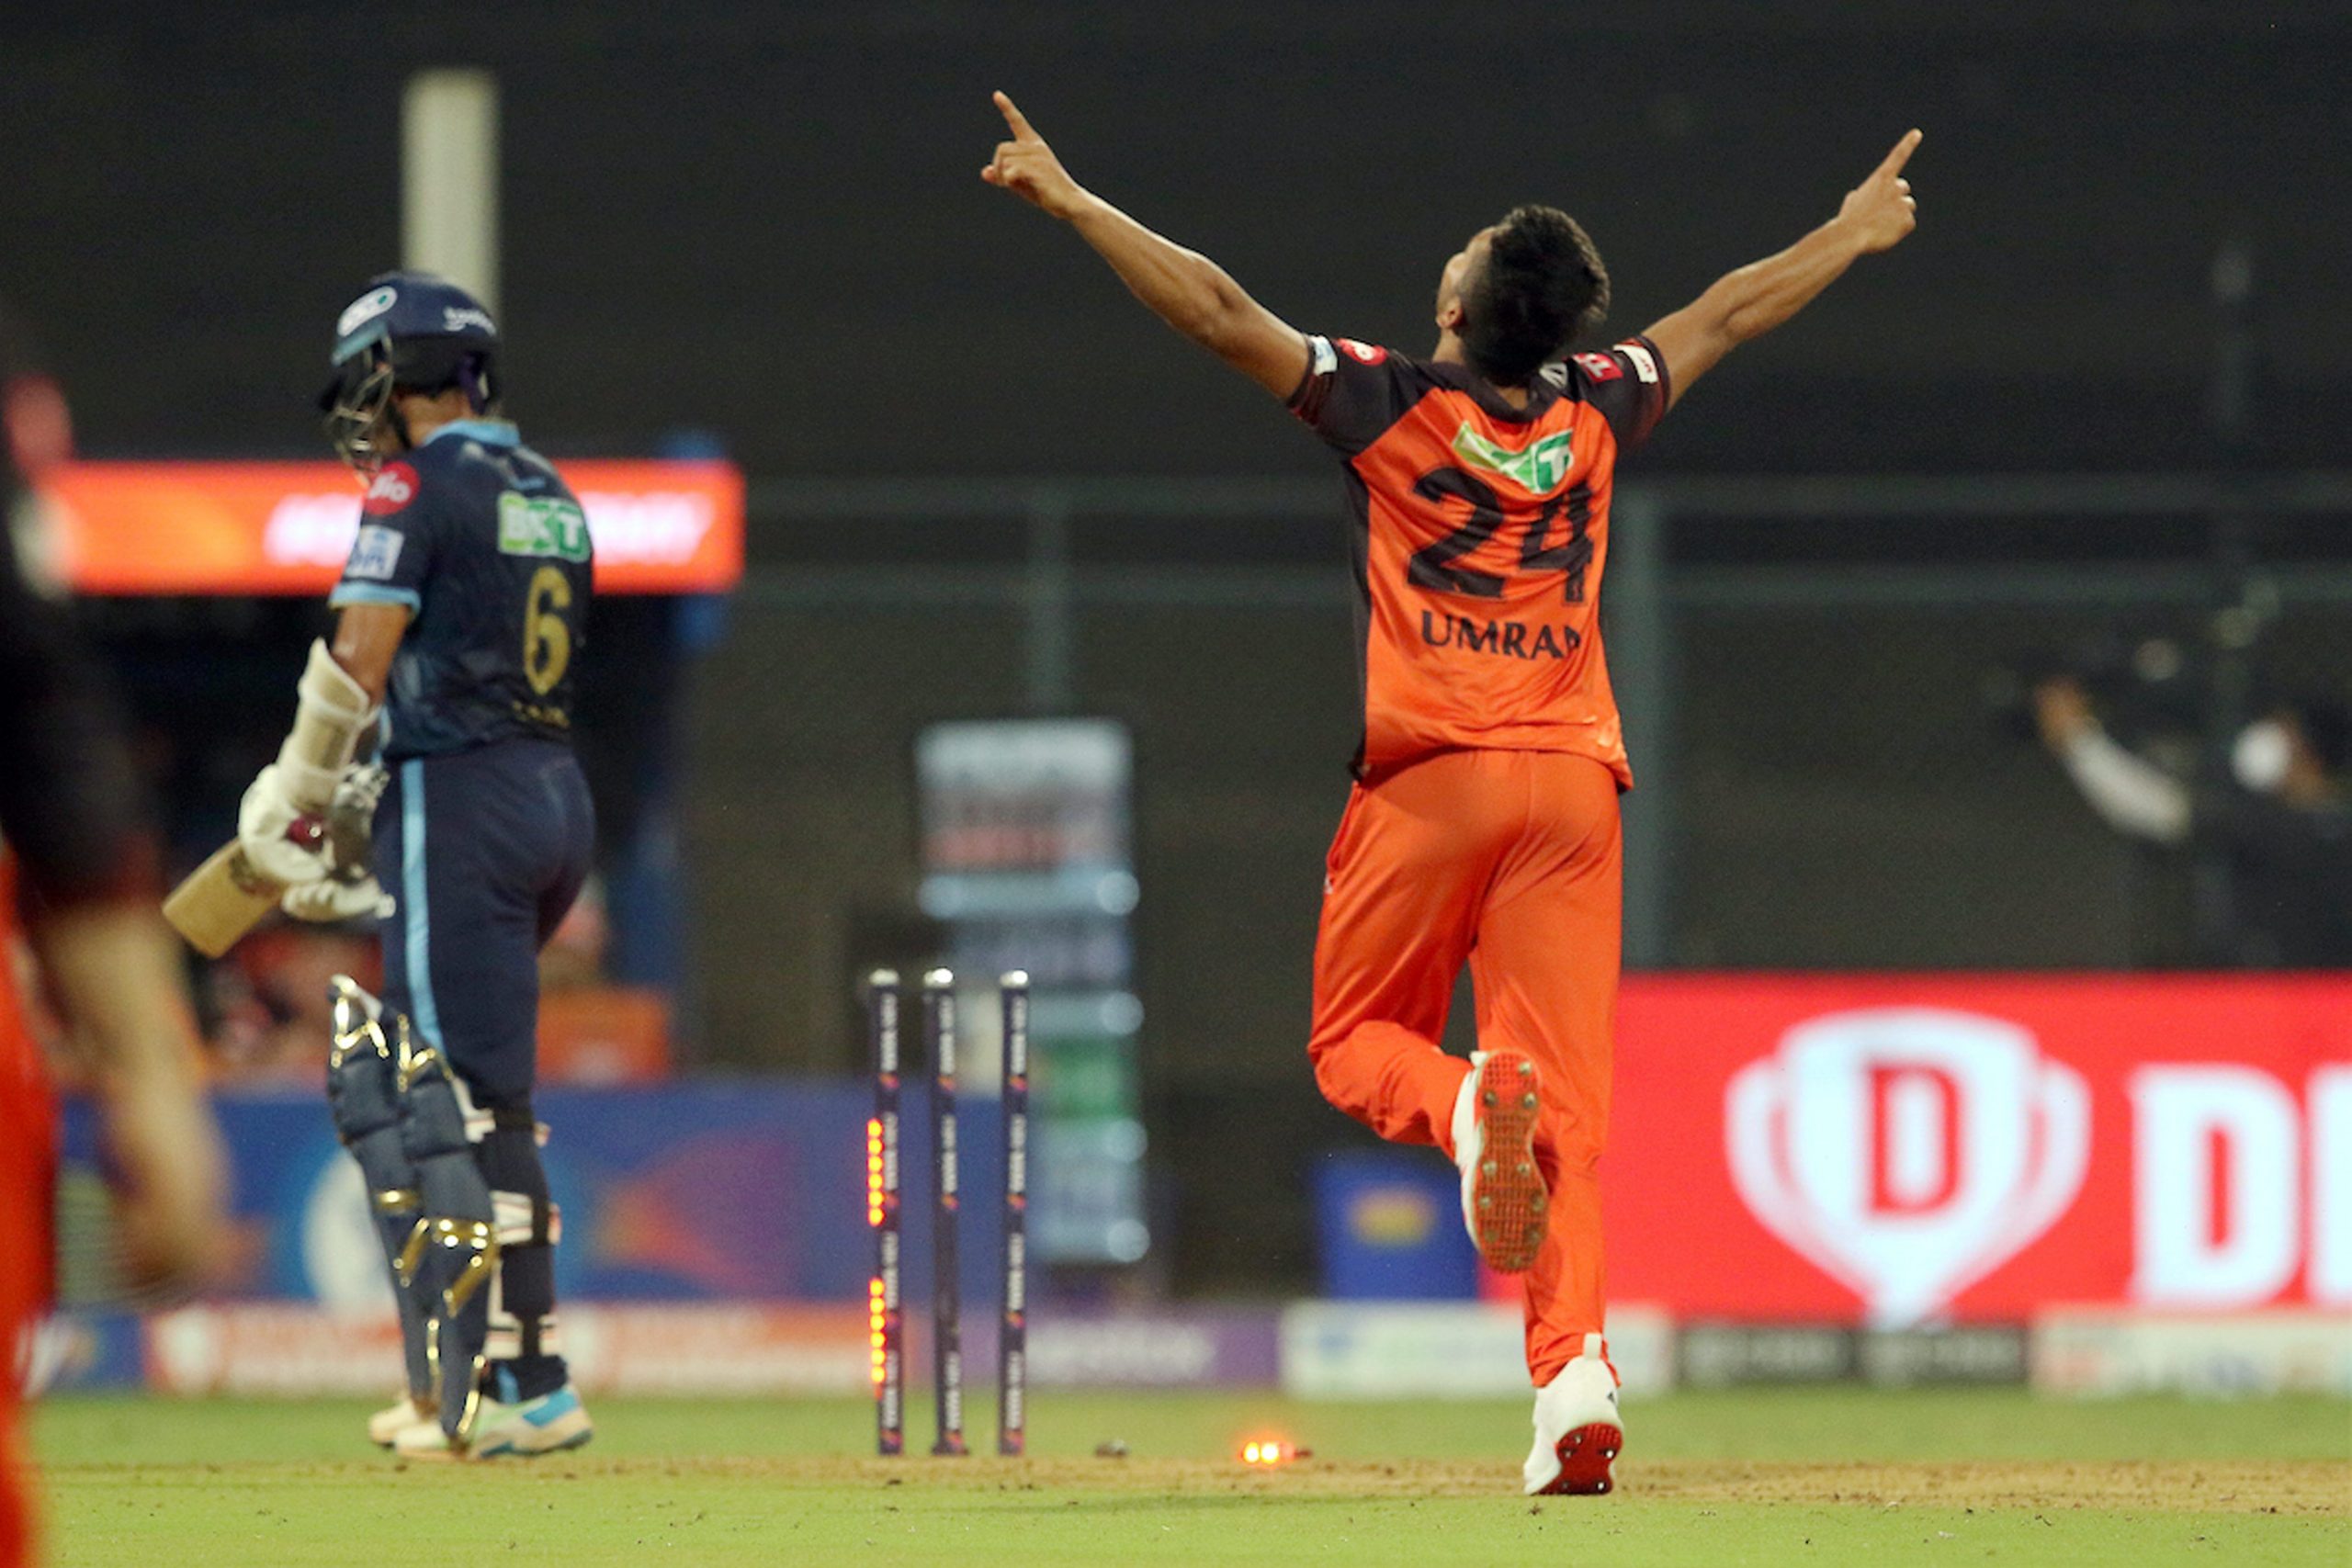 Mentor Dale Steyn wants Sunrisers Hyderabad’s Umran Malik to bowl as per field, change pace